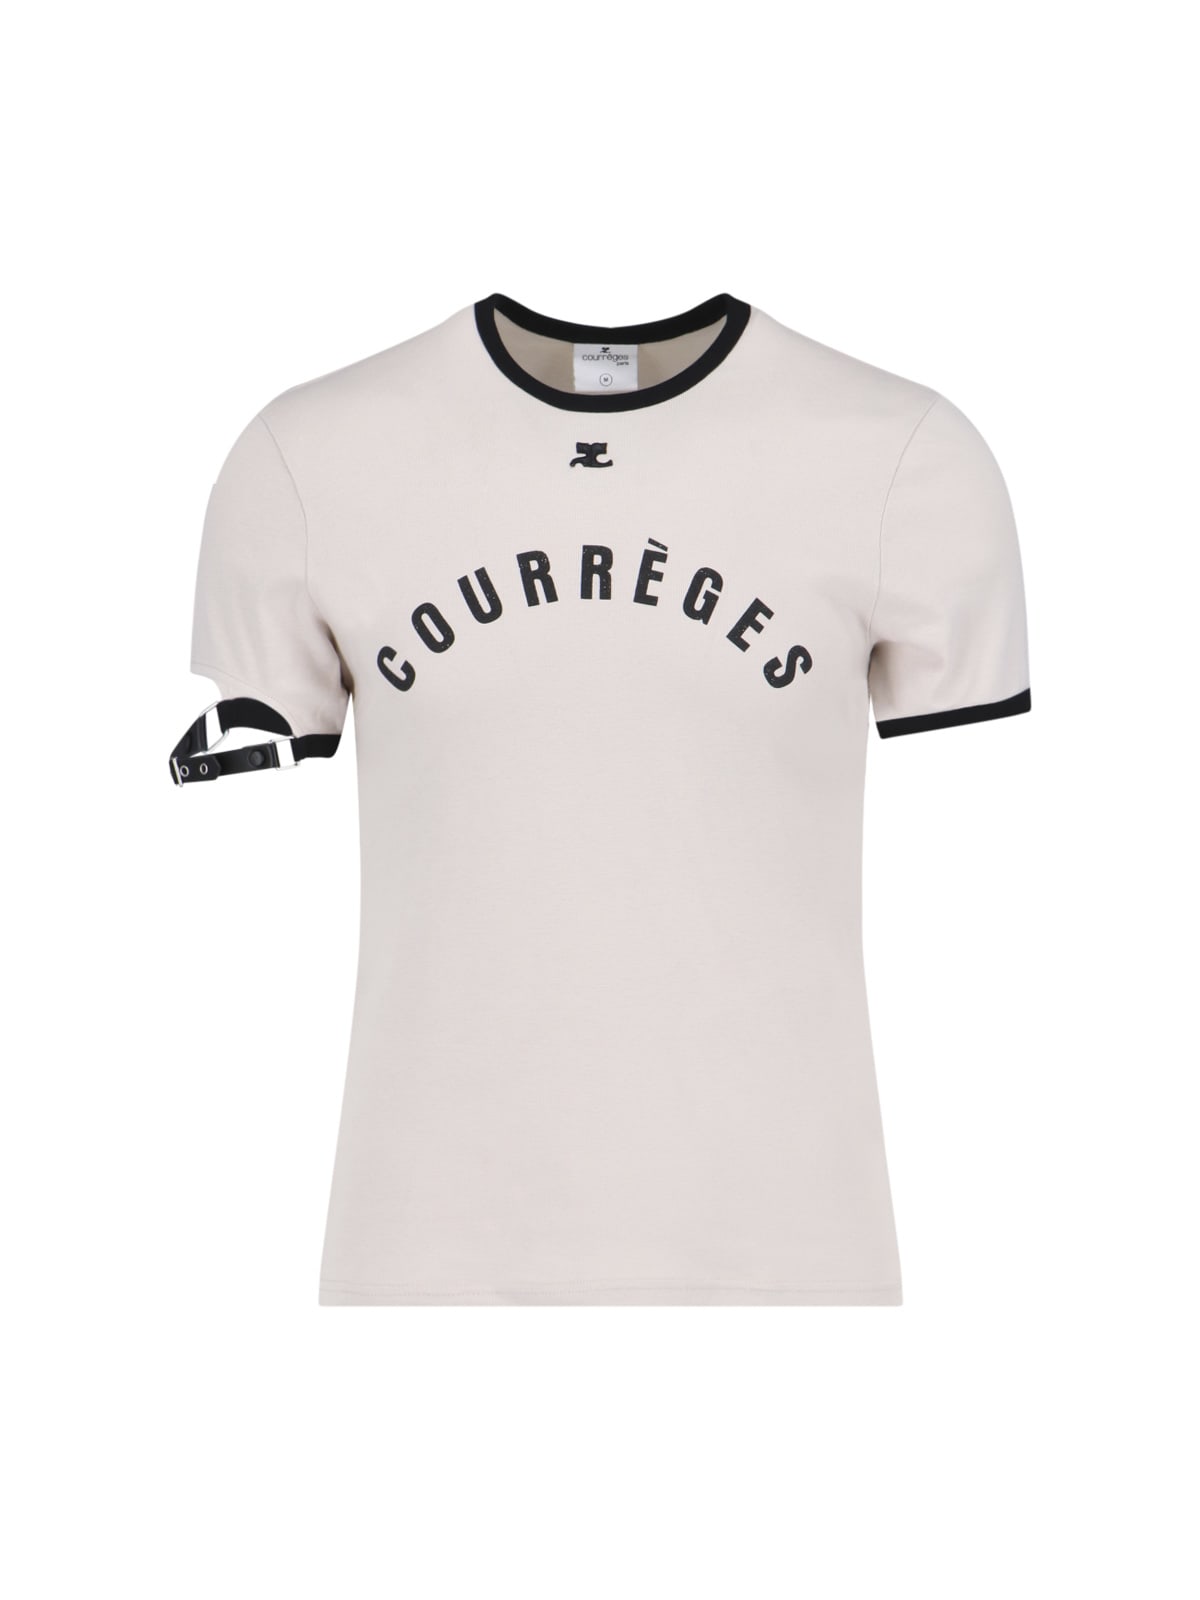 Courrèges T-shirt With Contrasting Details